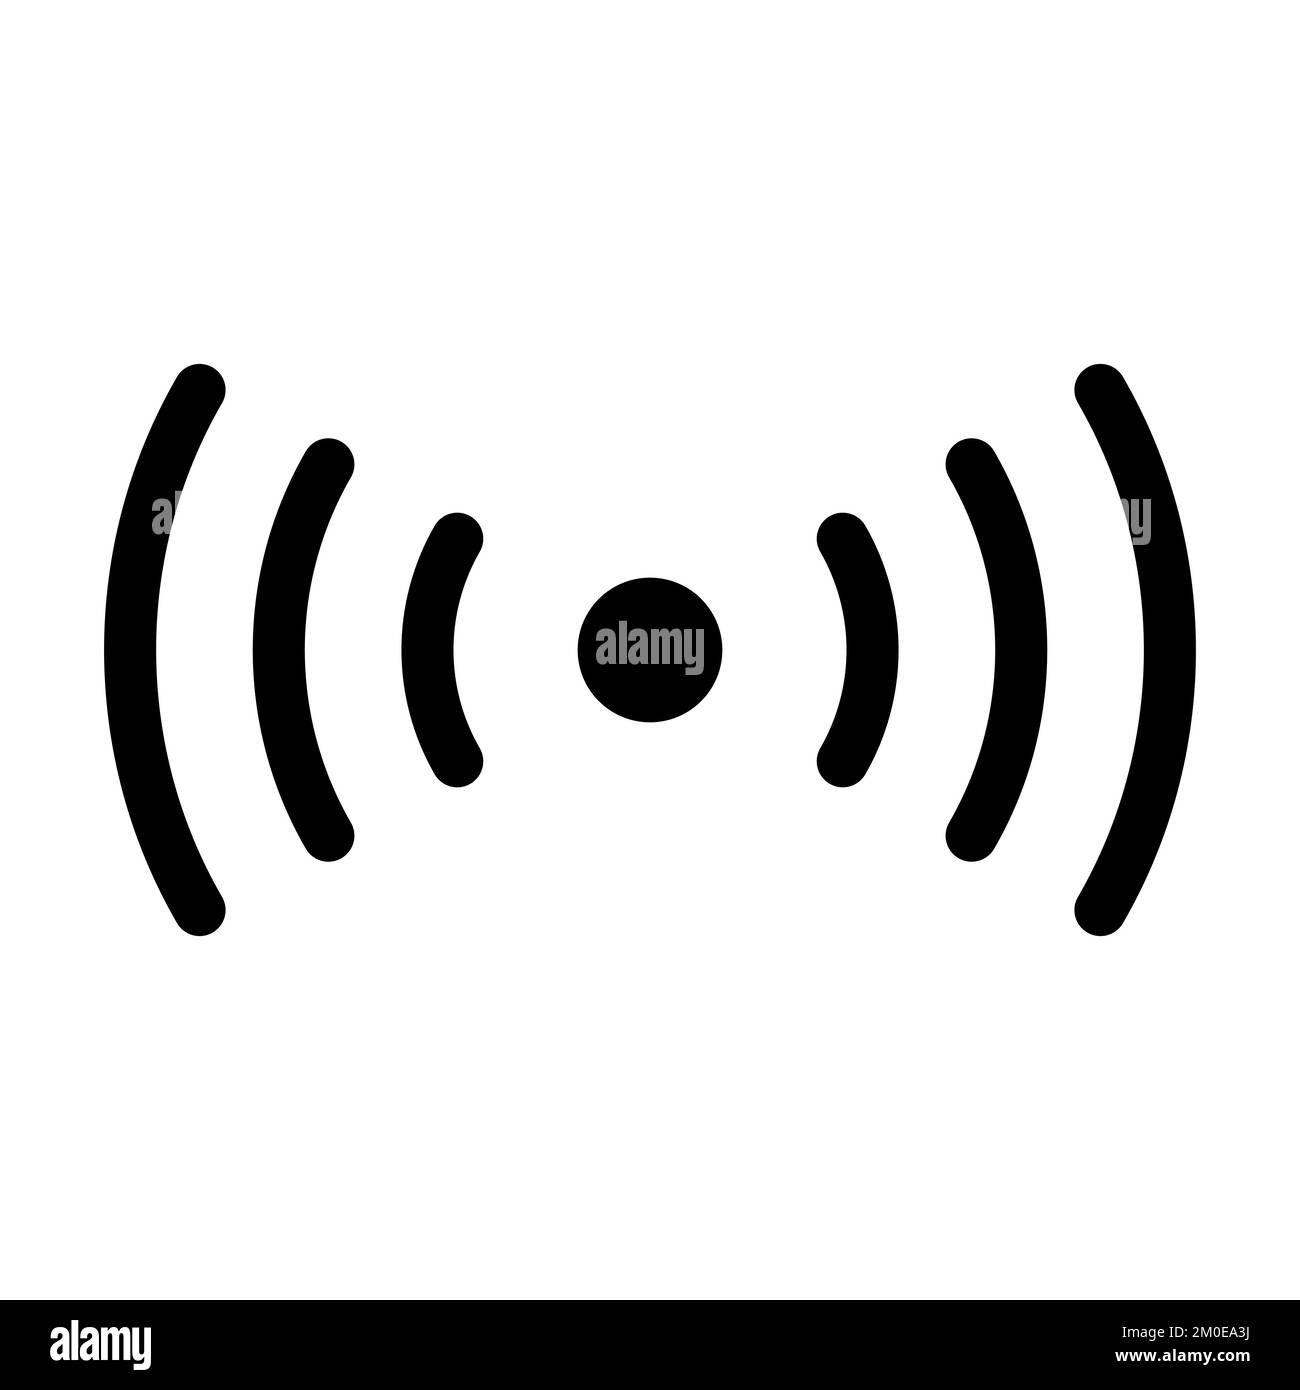 sound radio wave icon vector wifi sound signal connection for graphic design, logo, website, social media, mobile app, UI illustration Stock Vector